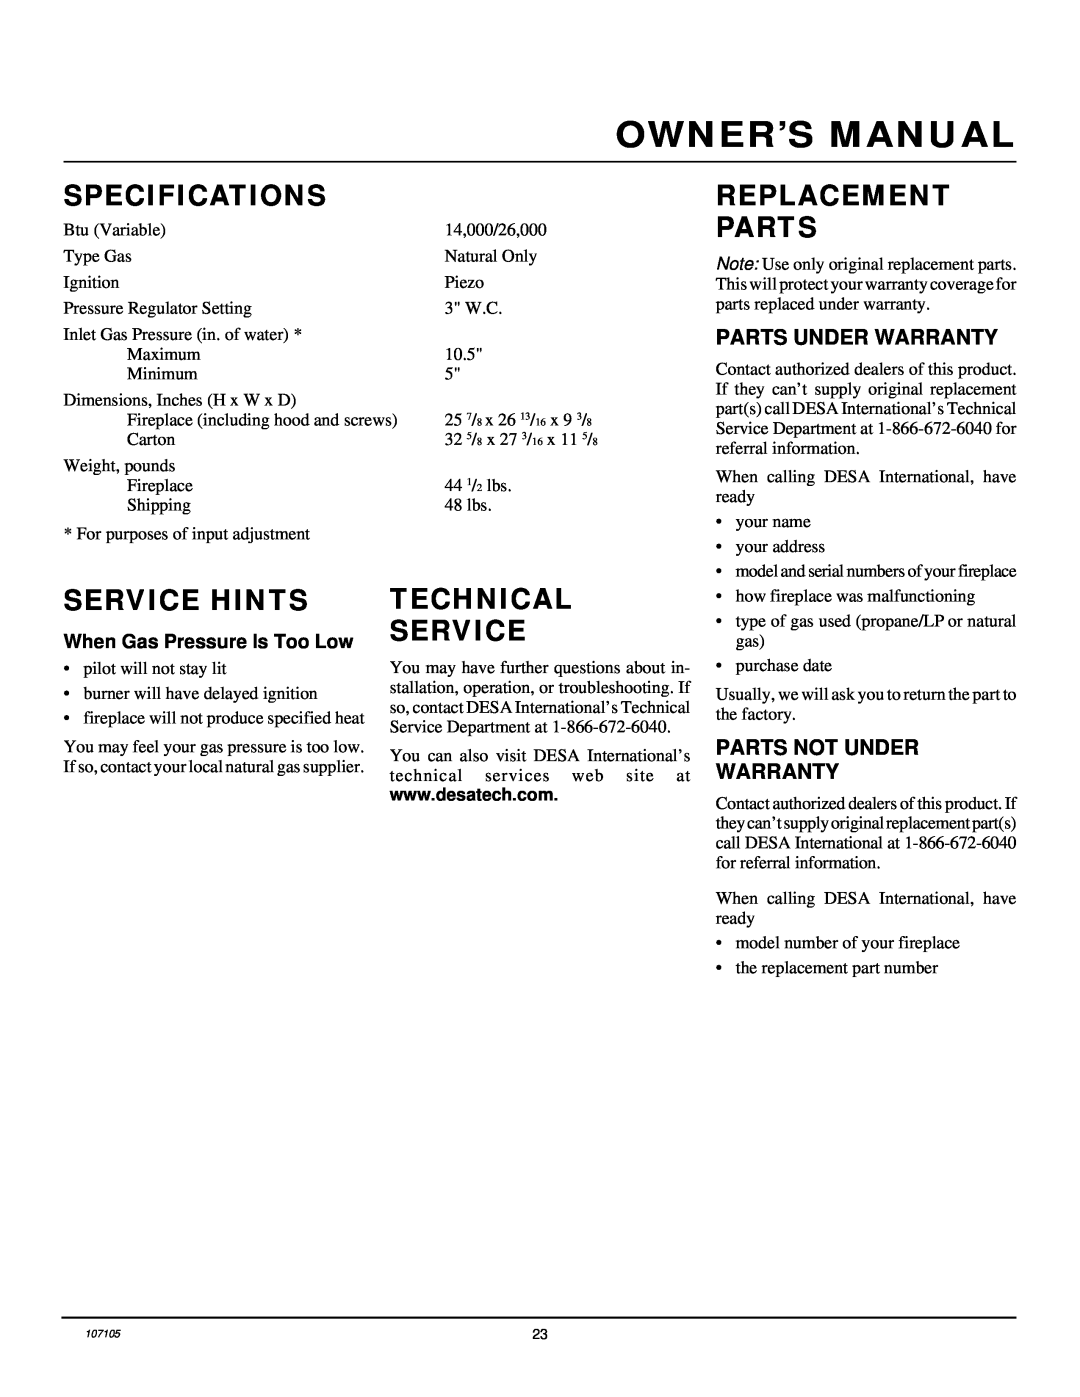 Desa FMH26TN 14 Specifications, Replacement Parts, Service Hints, Technical Service, Parts Under Warranty 